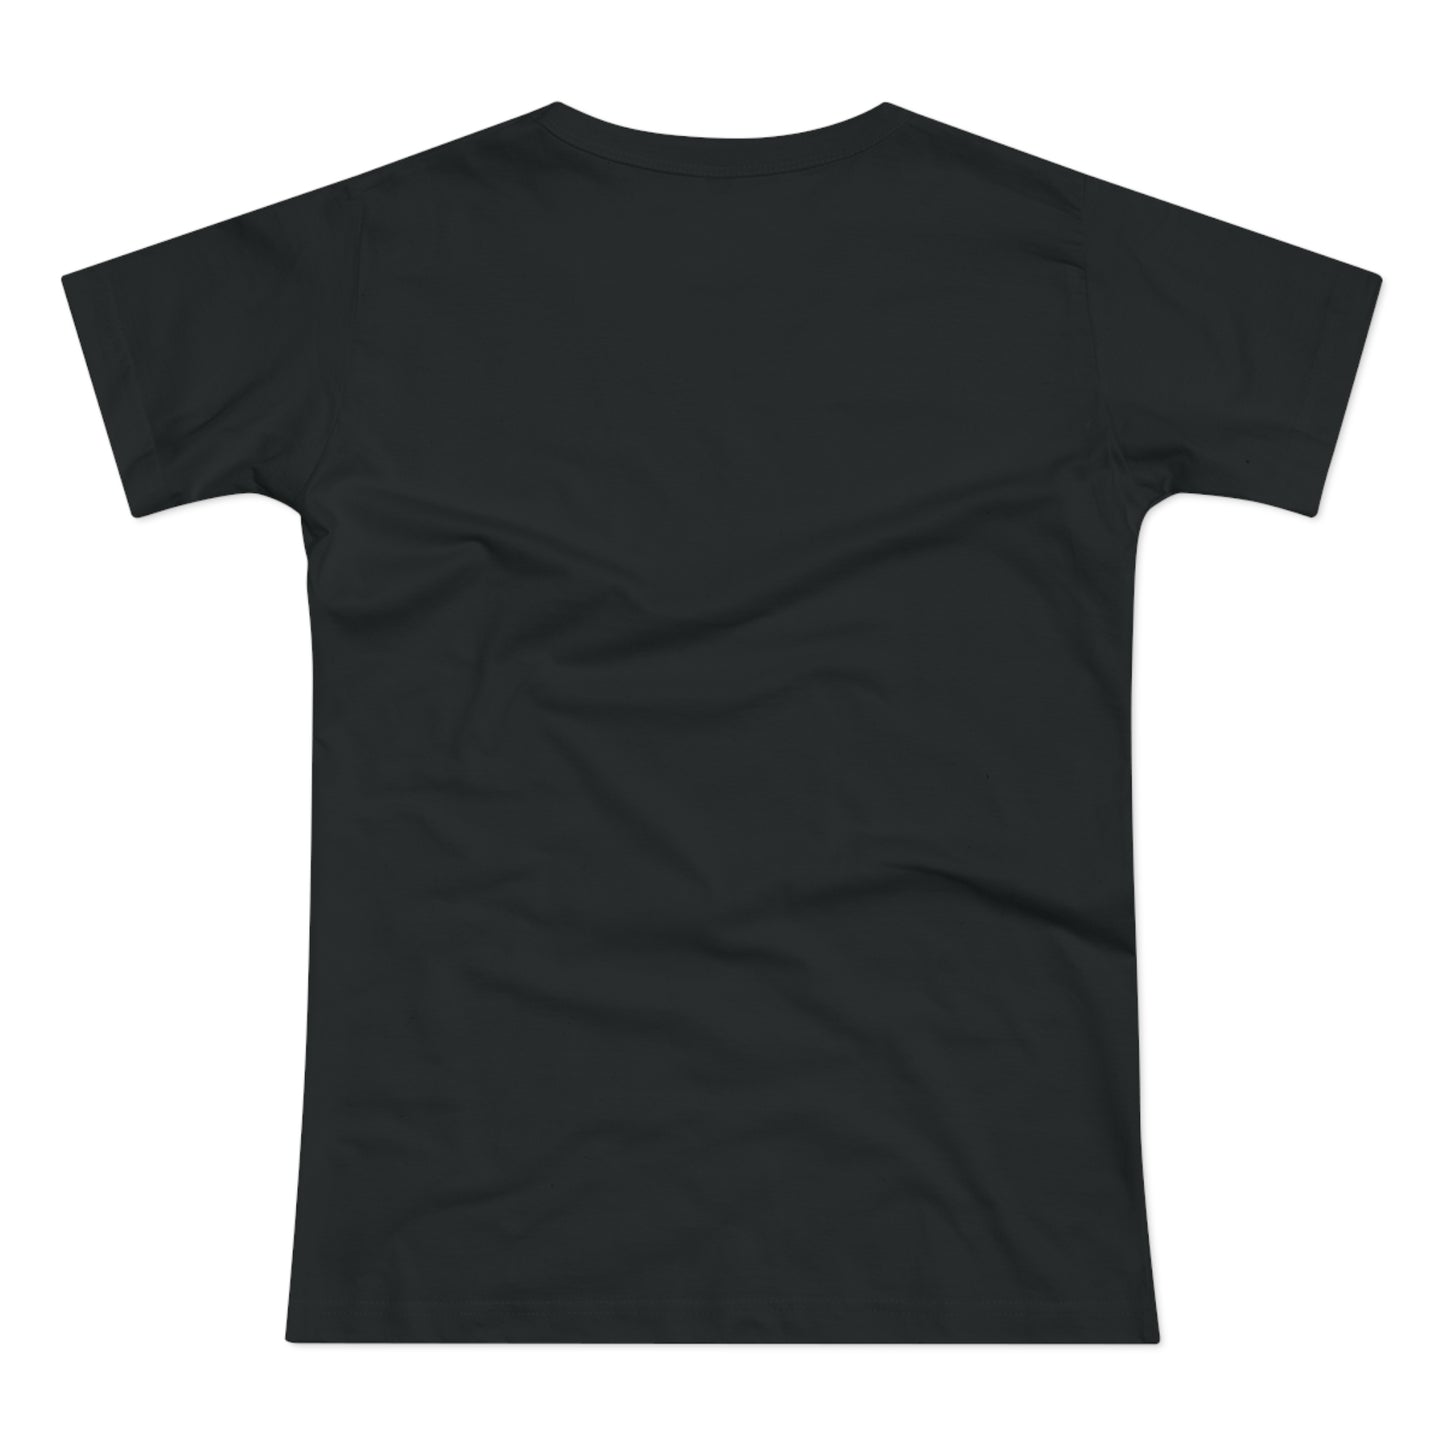 Rundust Single Jersey Women's T-shirt